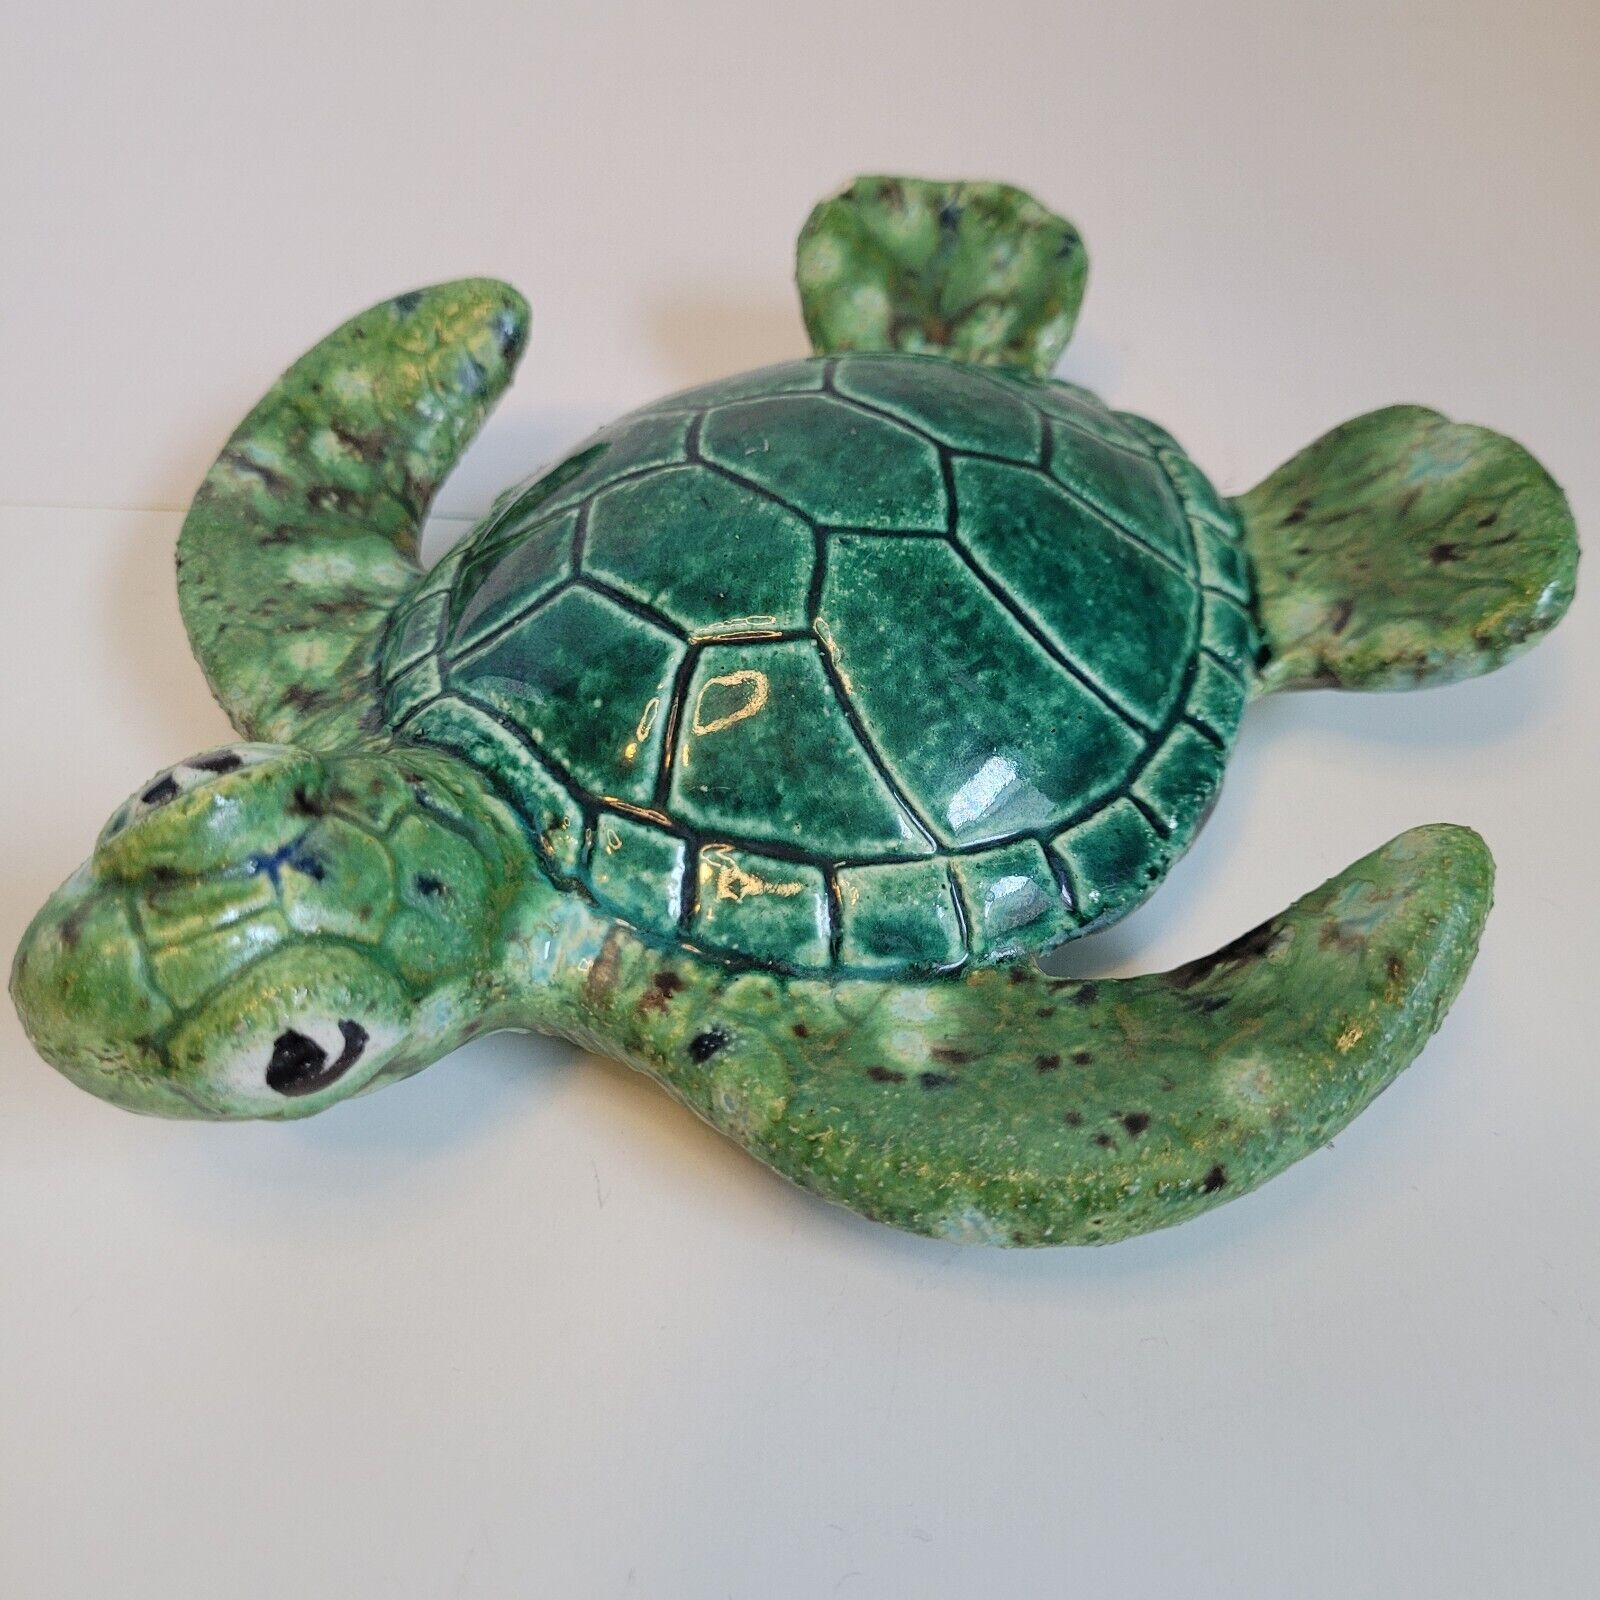 Handmade Ceramic Green Sea Turtle Signed Ben Diller Hawaii See Description Nice